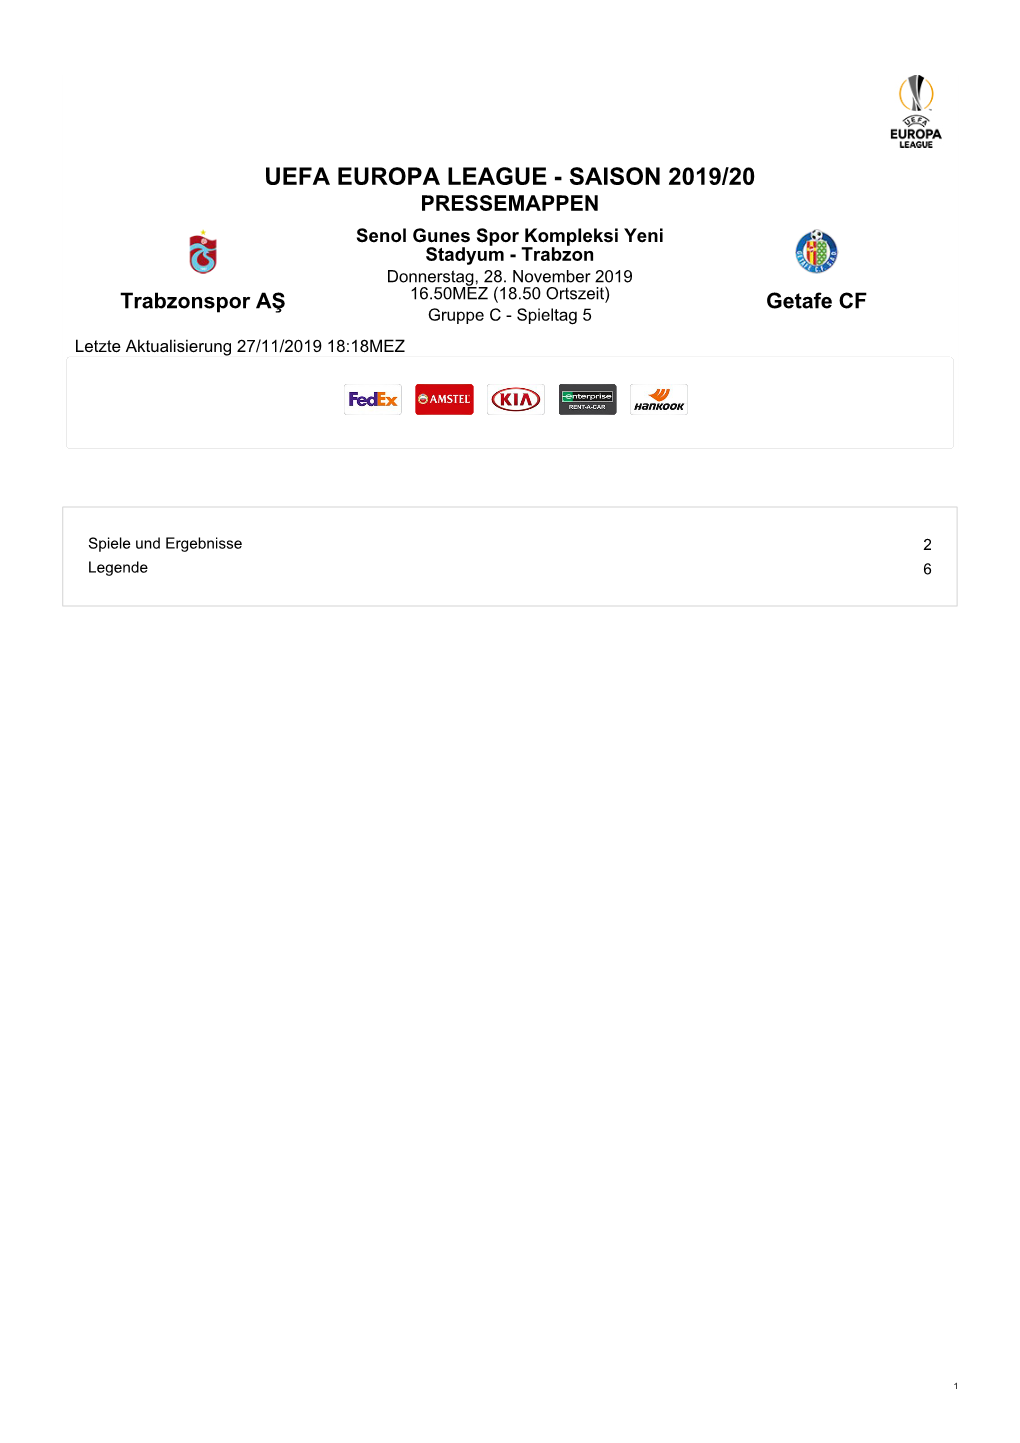 UEFA EUROPA LEAGUE - SAISON 2019/20 PRESSEMAPPEN Senol Gunes Spor Kompleksi Yeni Stadyum - Trabzon Donnerstag, 28